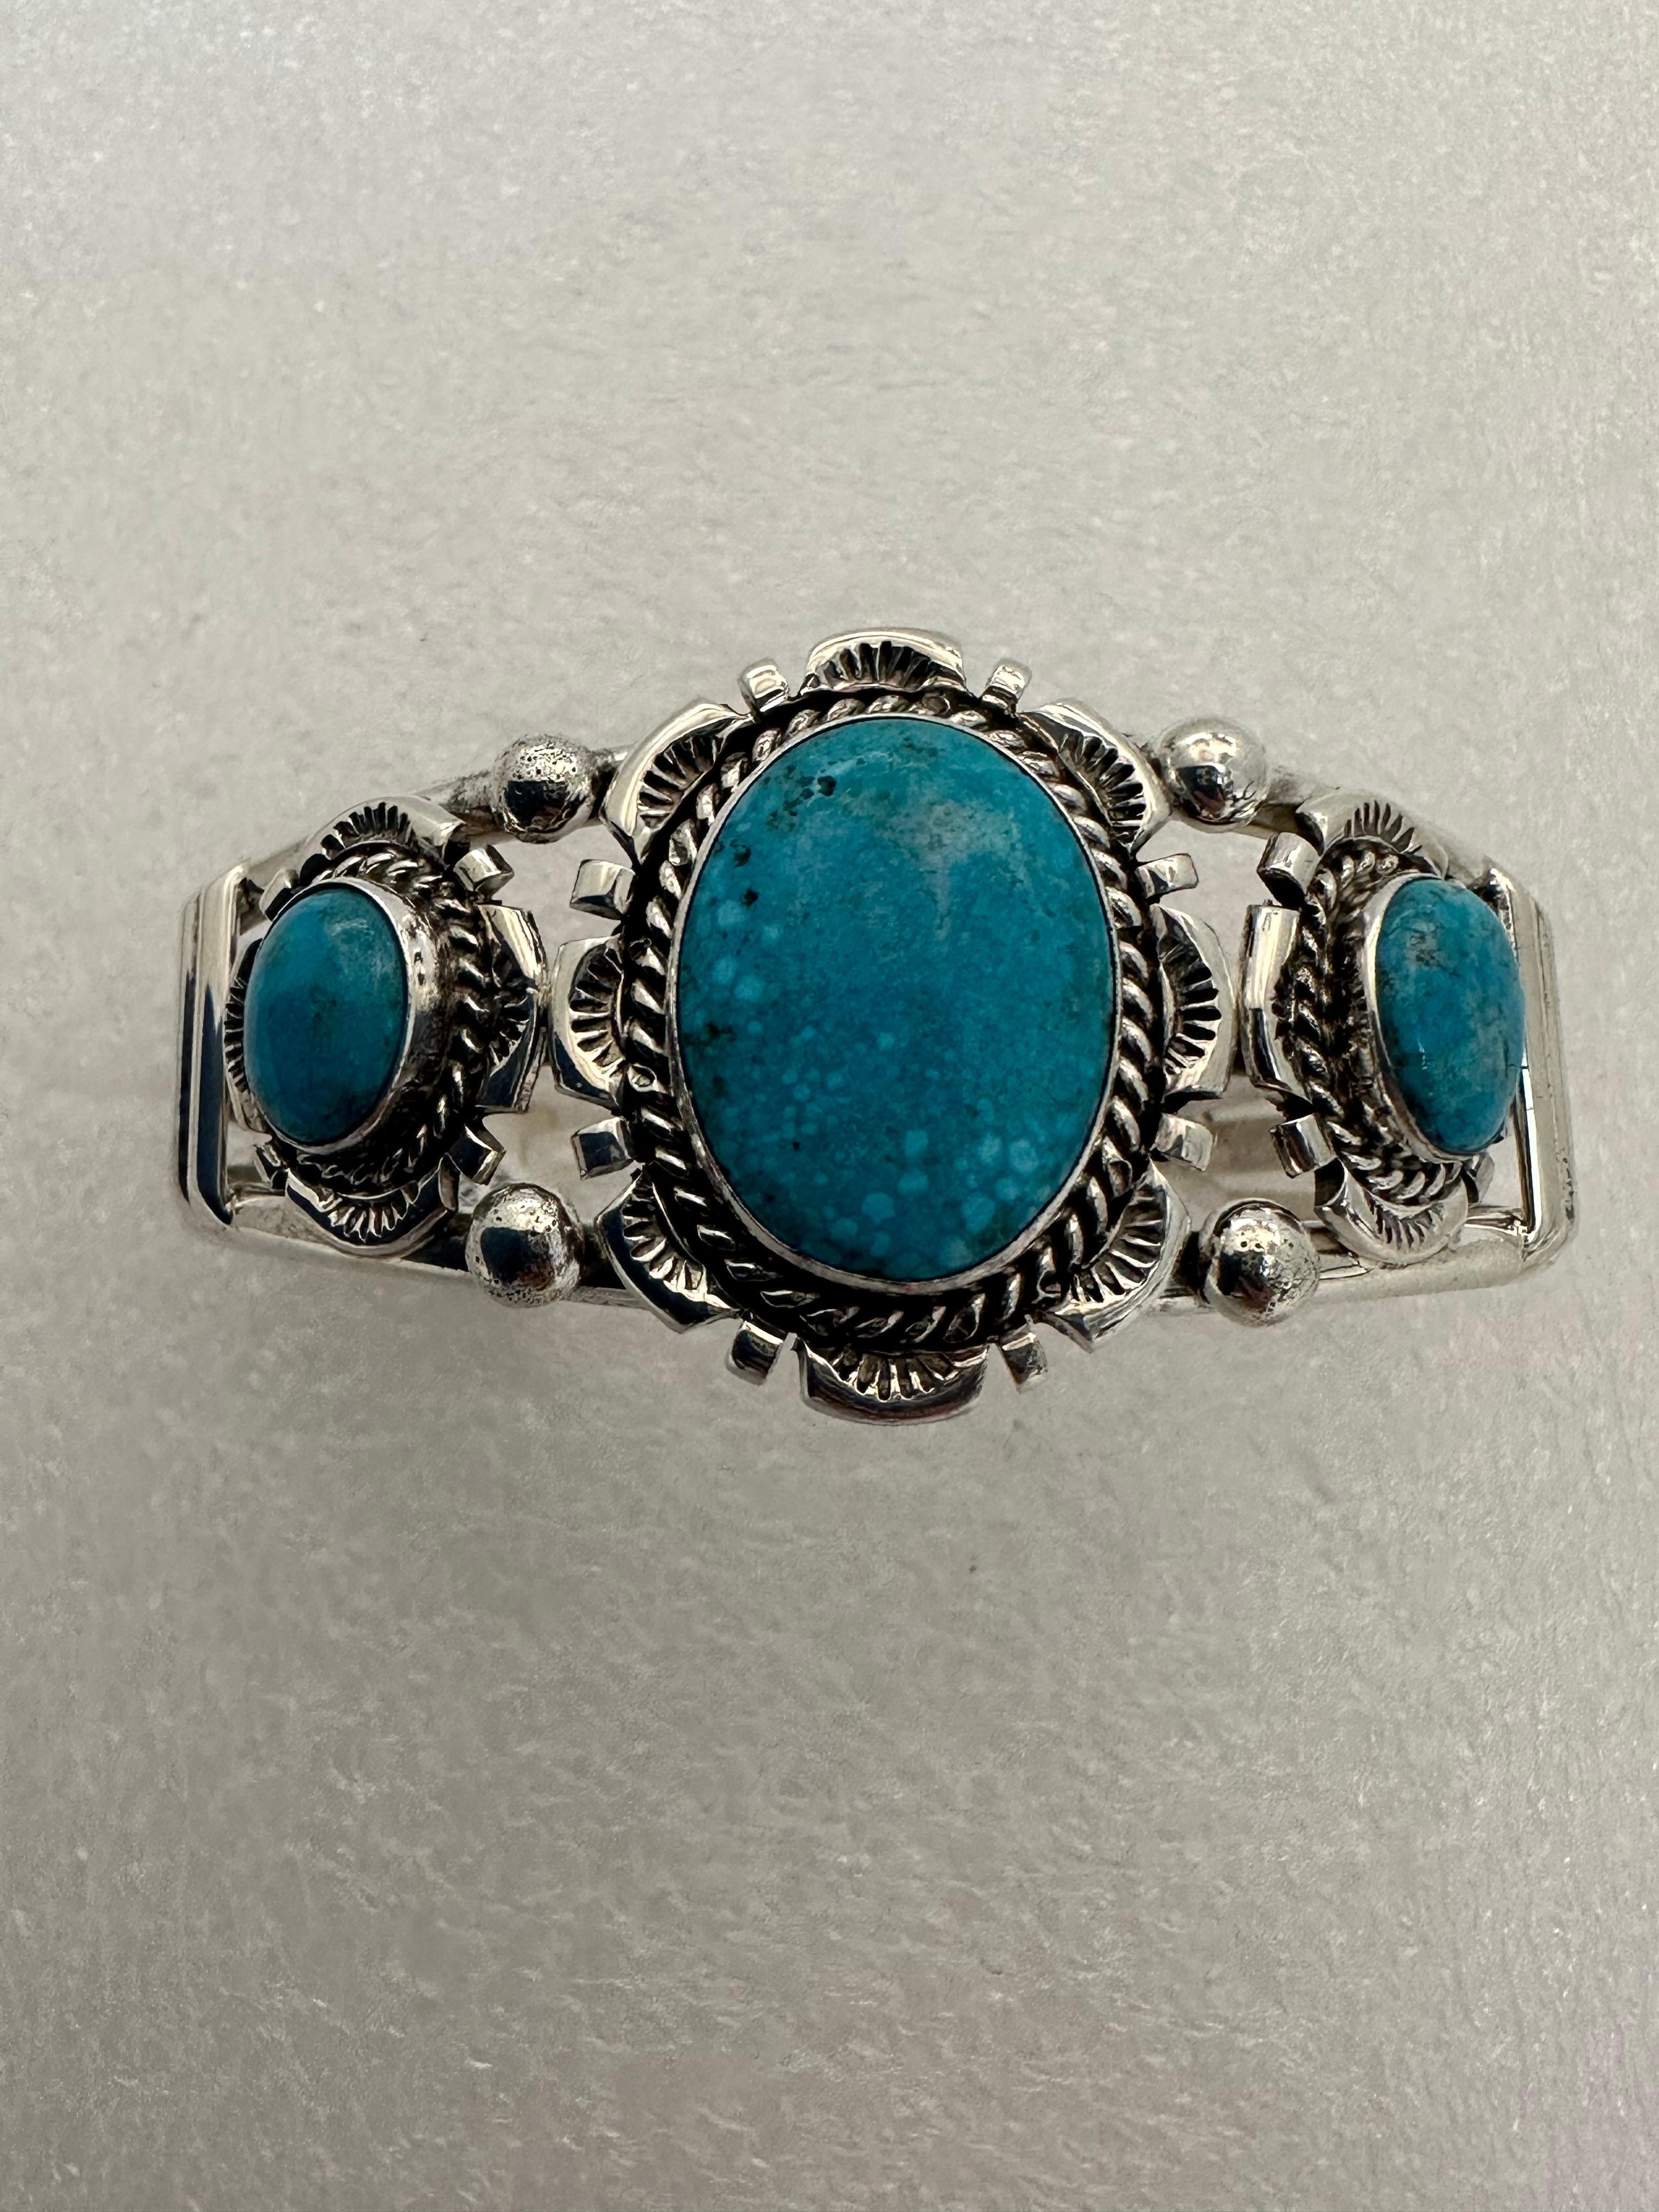 Navajo Sterling Silver .925 Kingman Turquoise Bracelet Signed By Augustine Largo
2 1/2